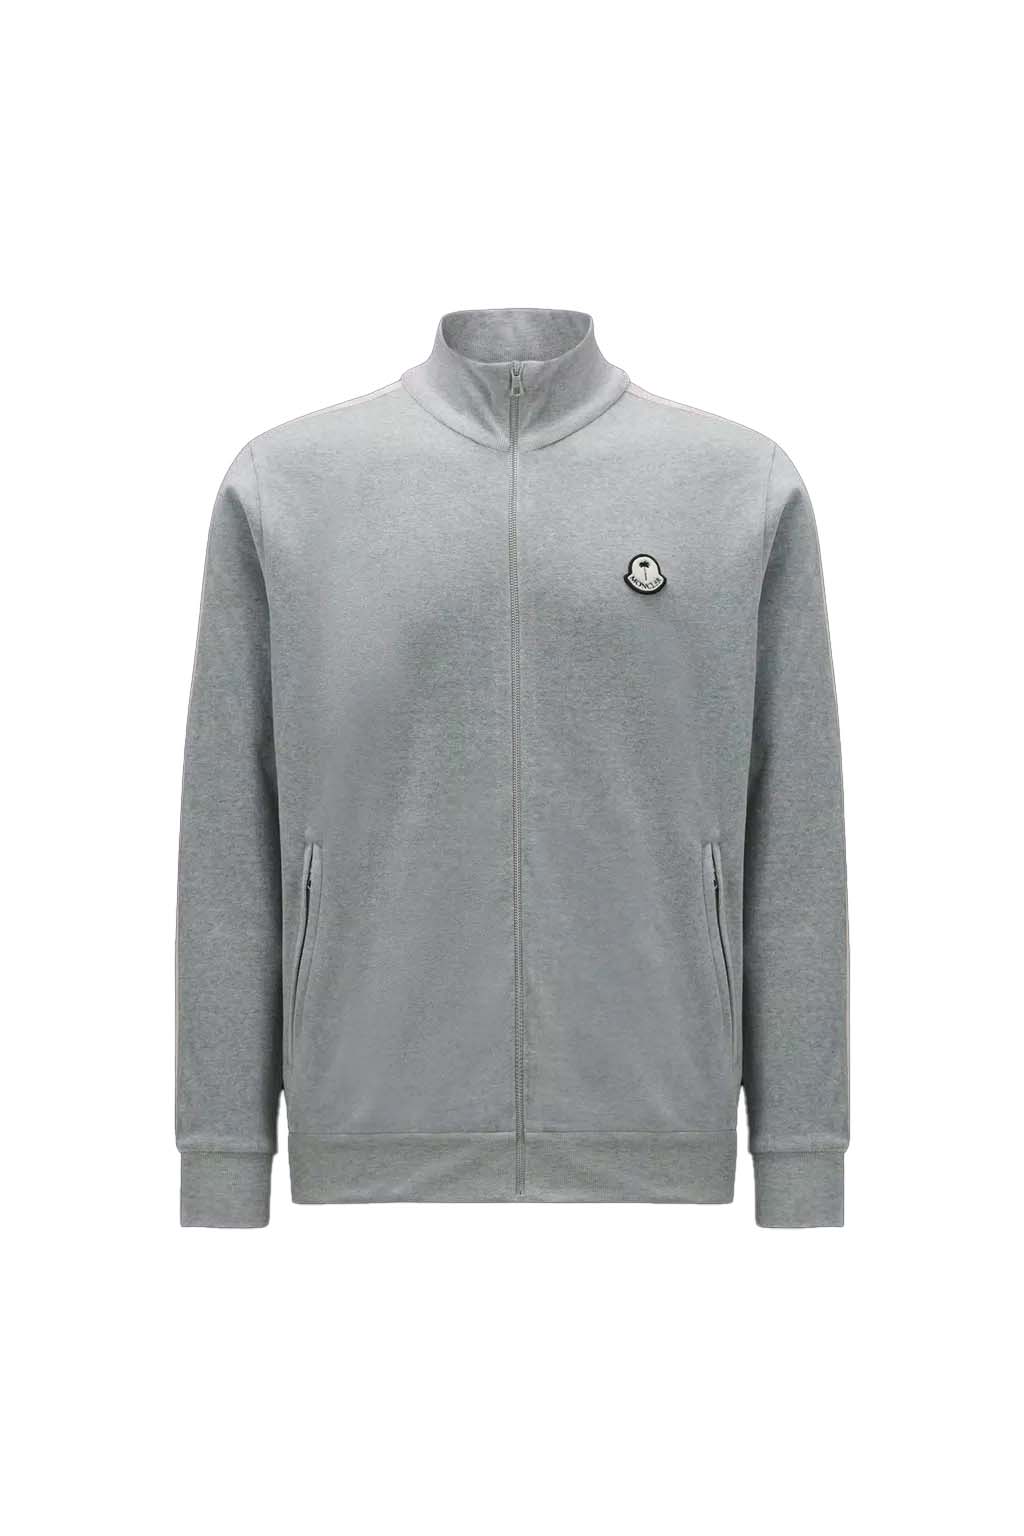 Moncler x Palm Angels Chenille Zip-Up Sweatshirt Grey